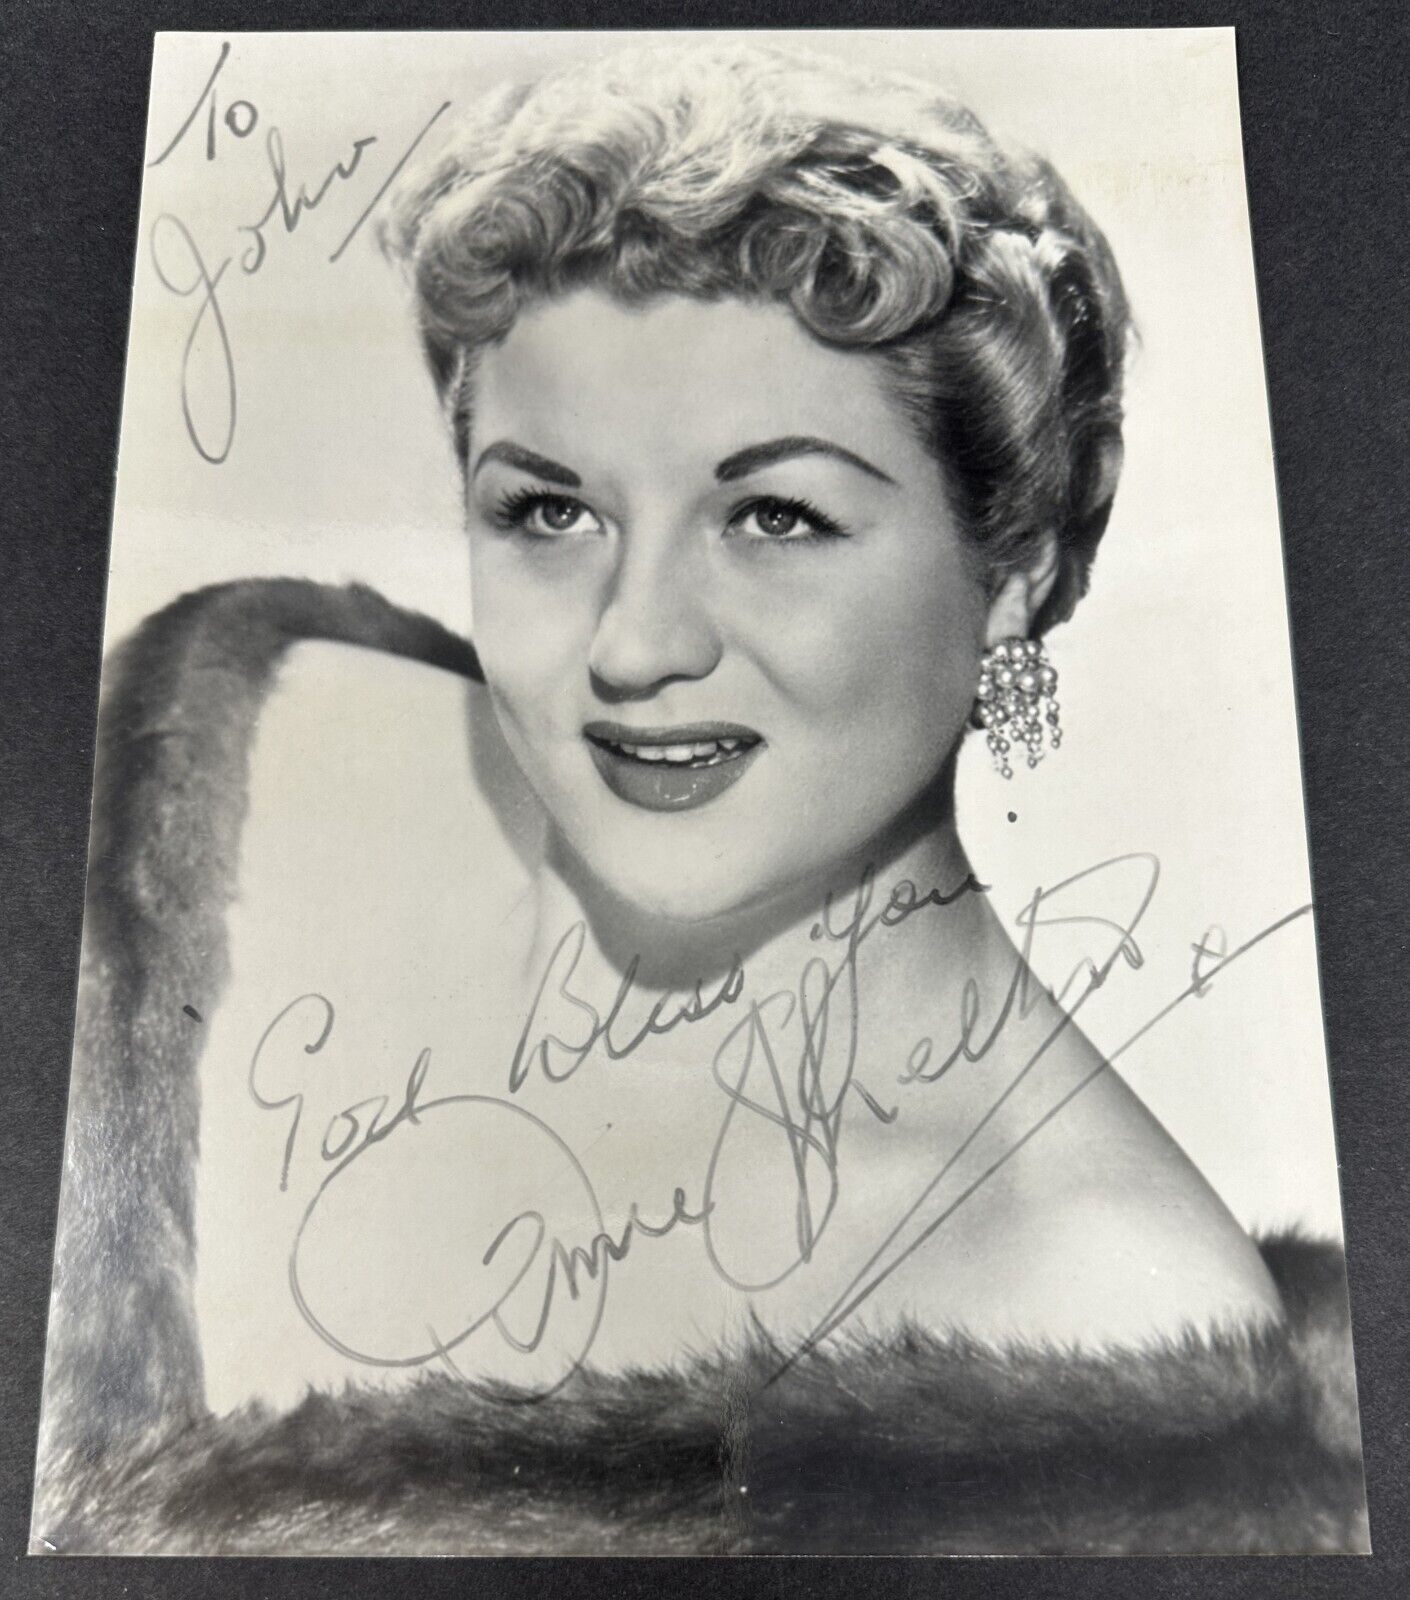 c 1950s Anne Shelton English Actress Singer Autograph Signature on Photo